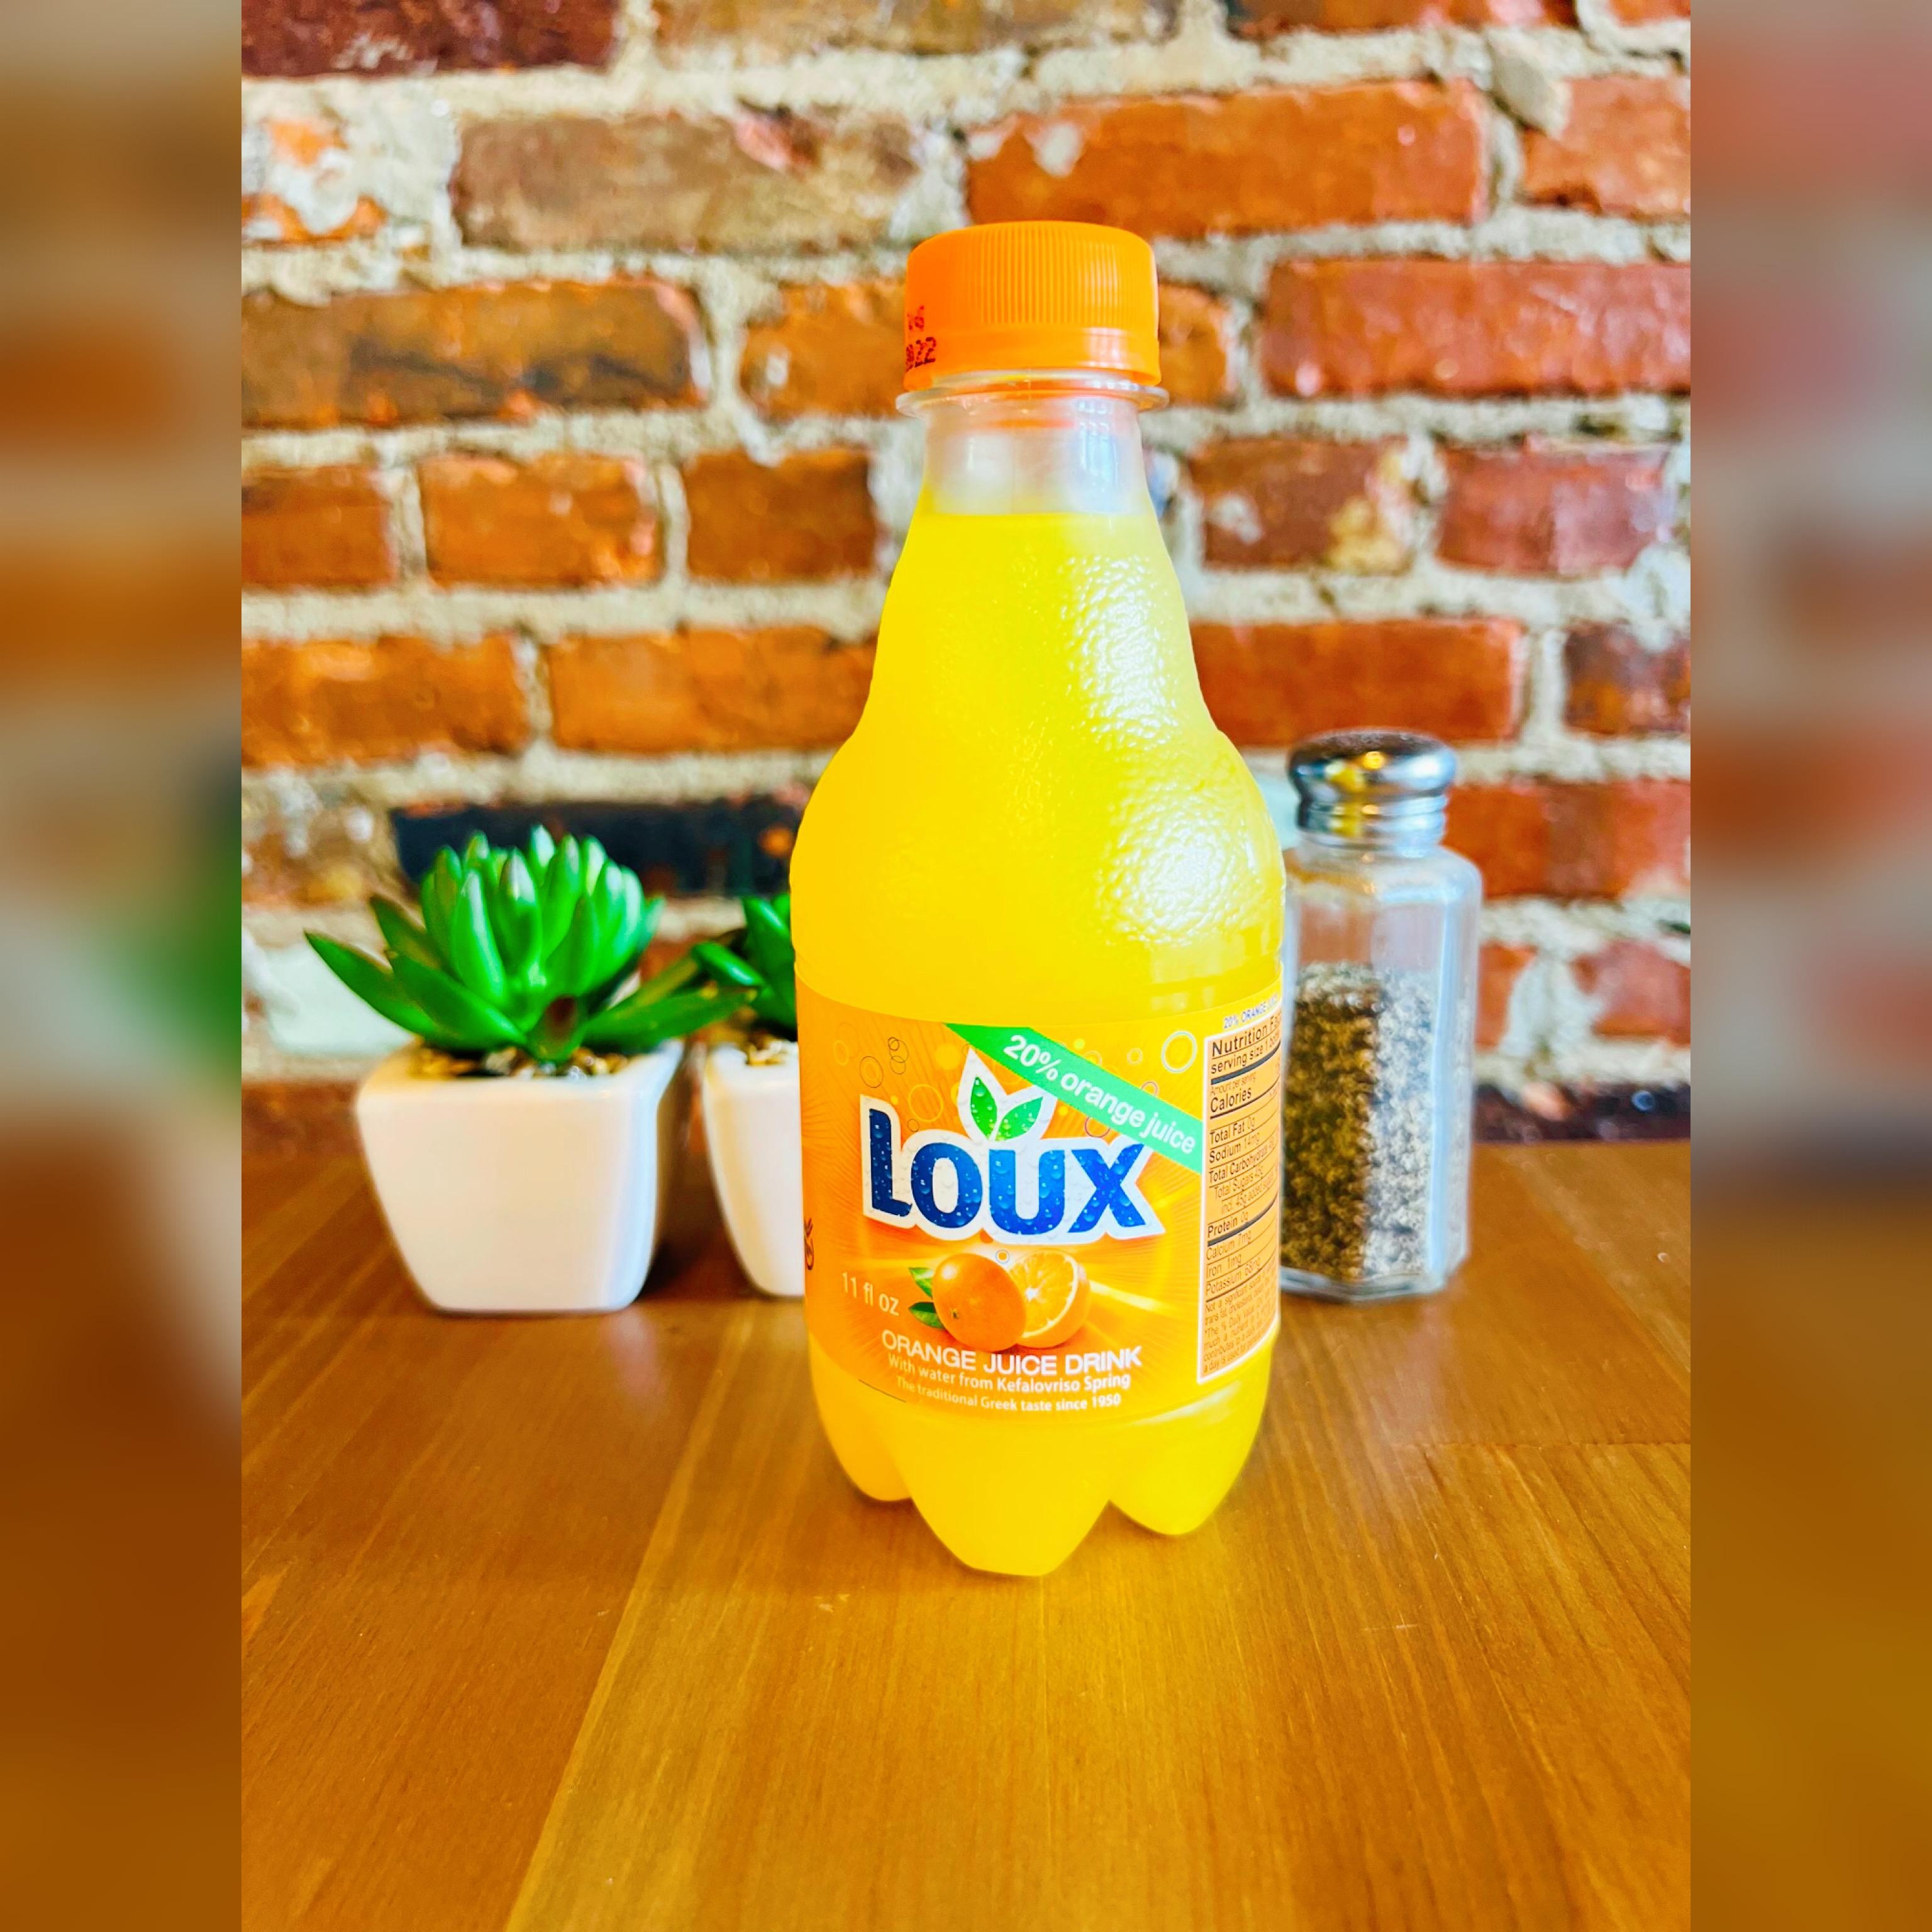 Loux Greek Orange